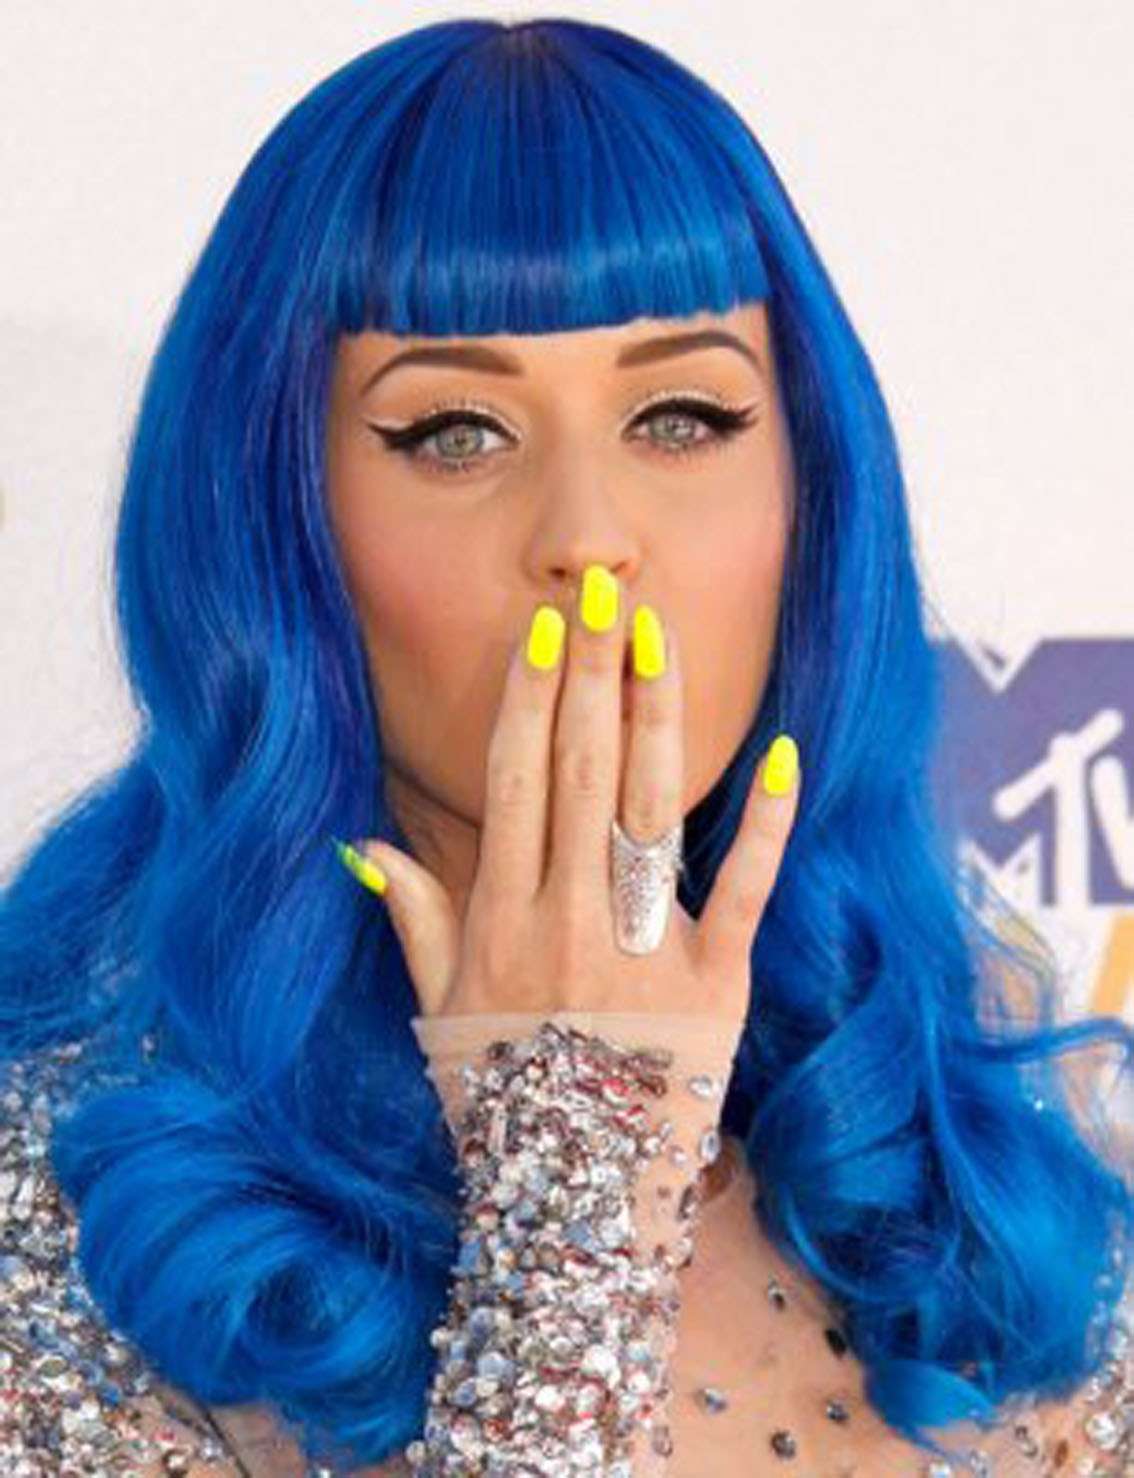 Smalto giallo per Katy Perry